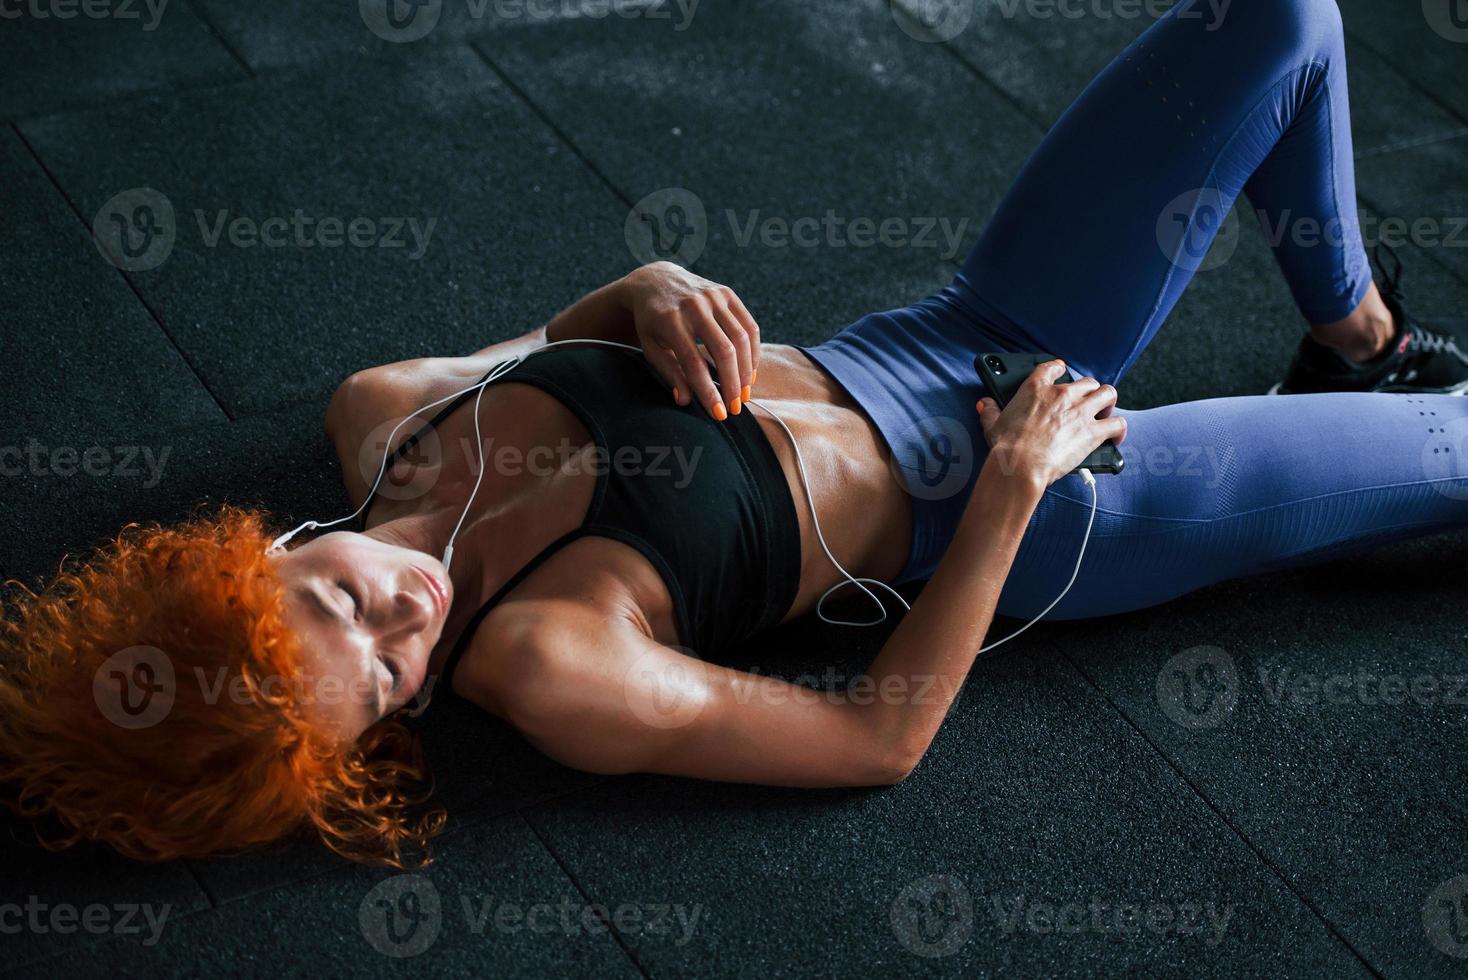 cansado, deitado. menina ruiva desportiva tem dia de fitness no ginásio durante o dia. tipo de corpo musculoso foto